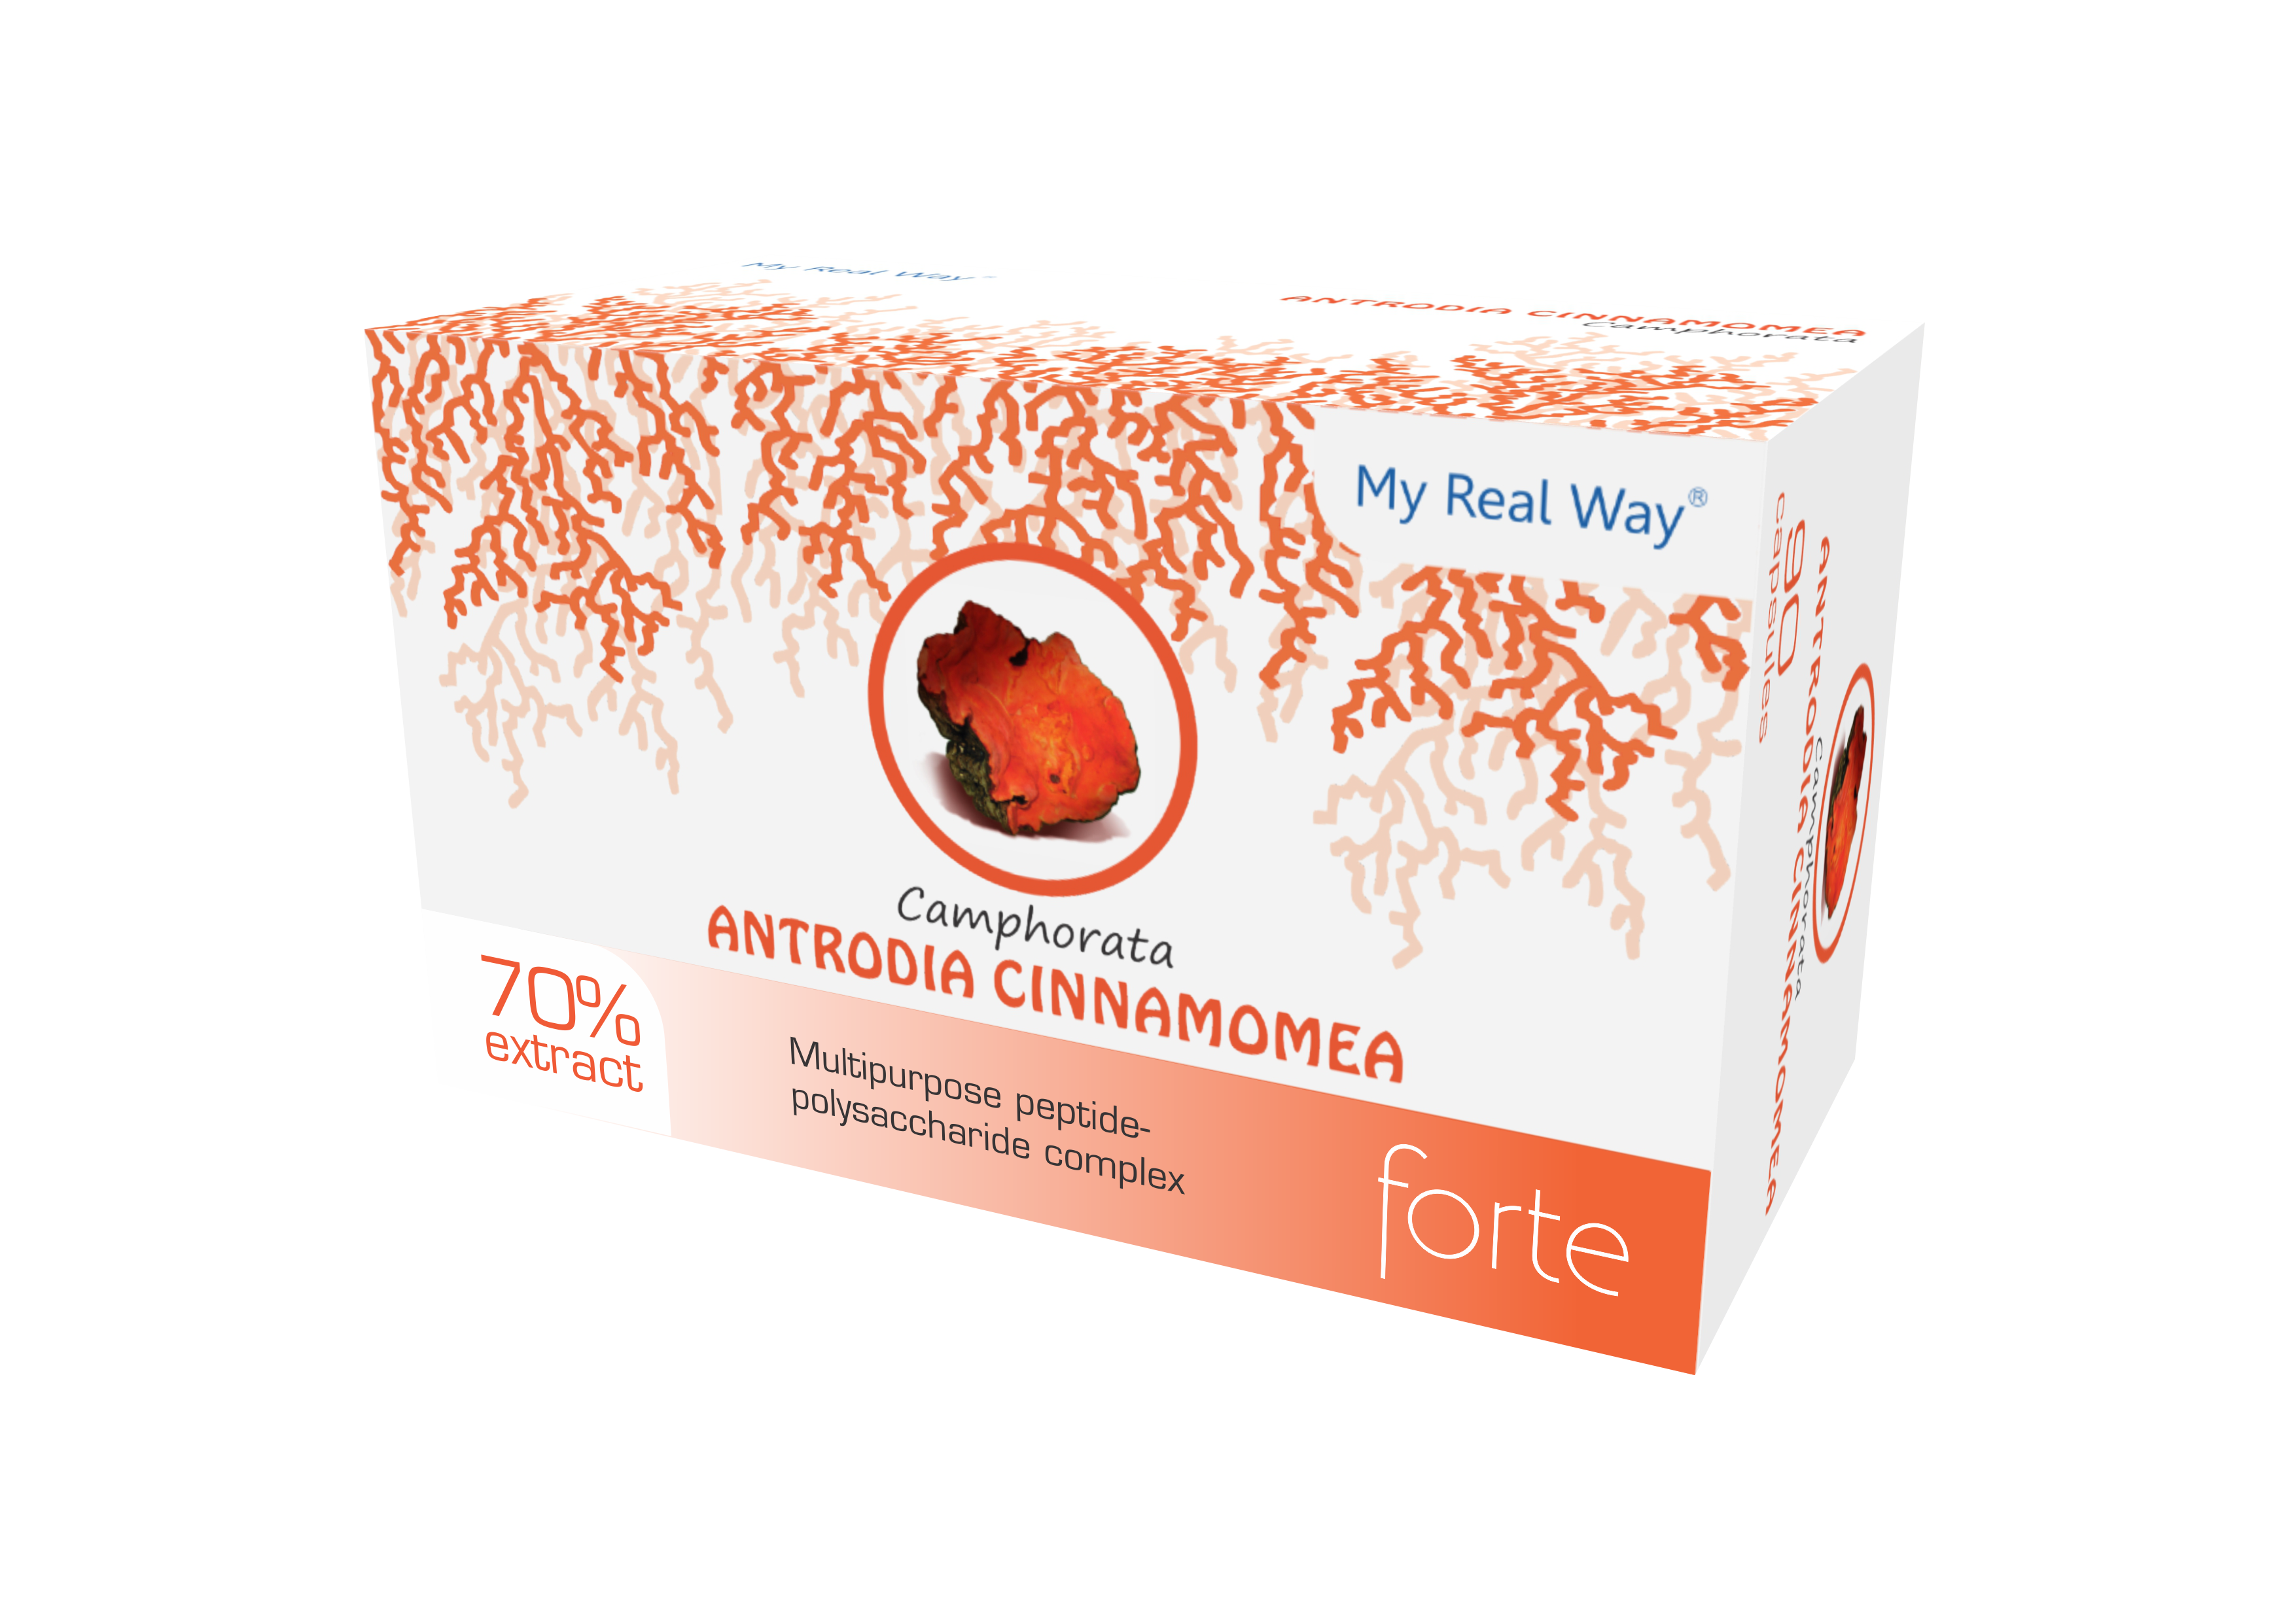 Antrodia Cinnamoma Camphorata